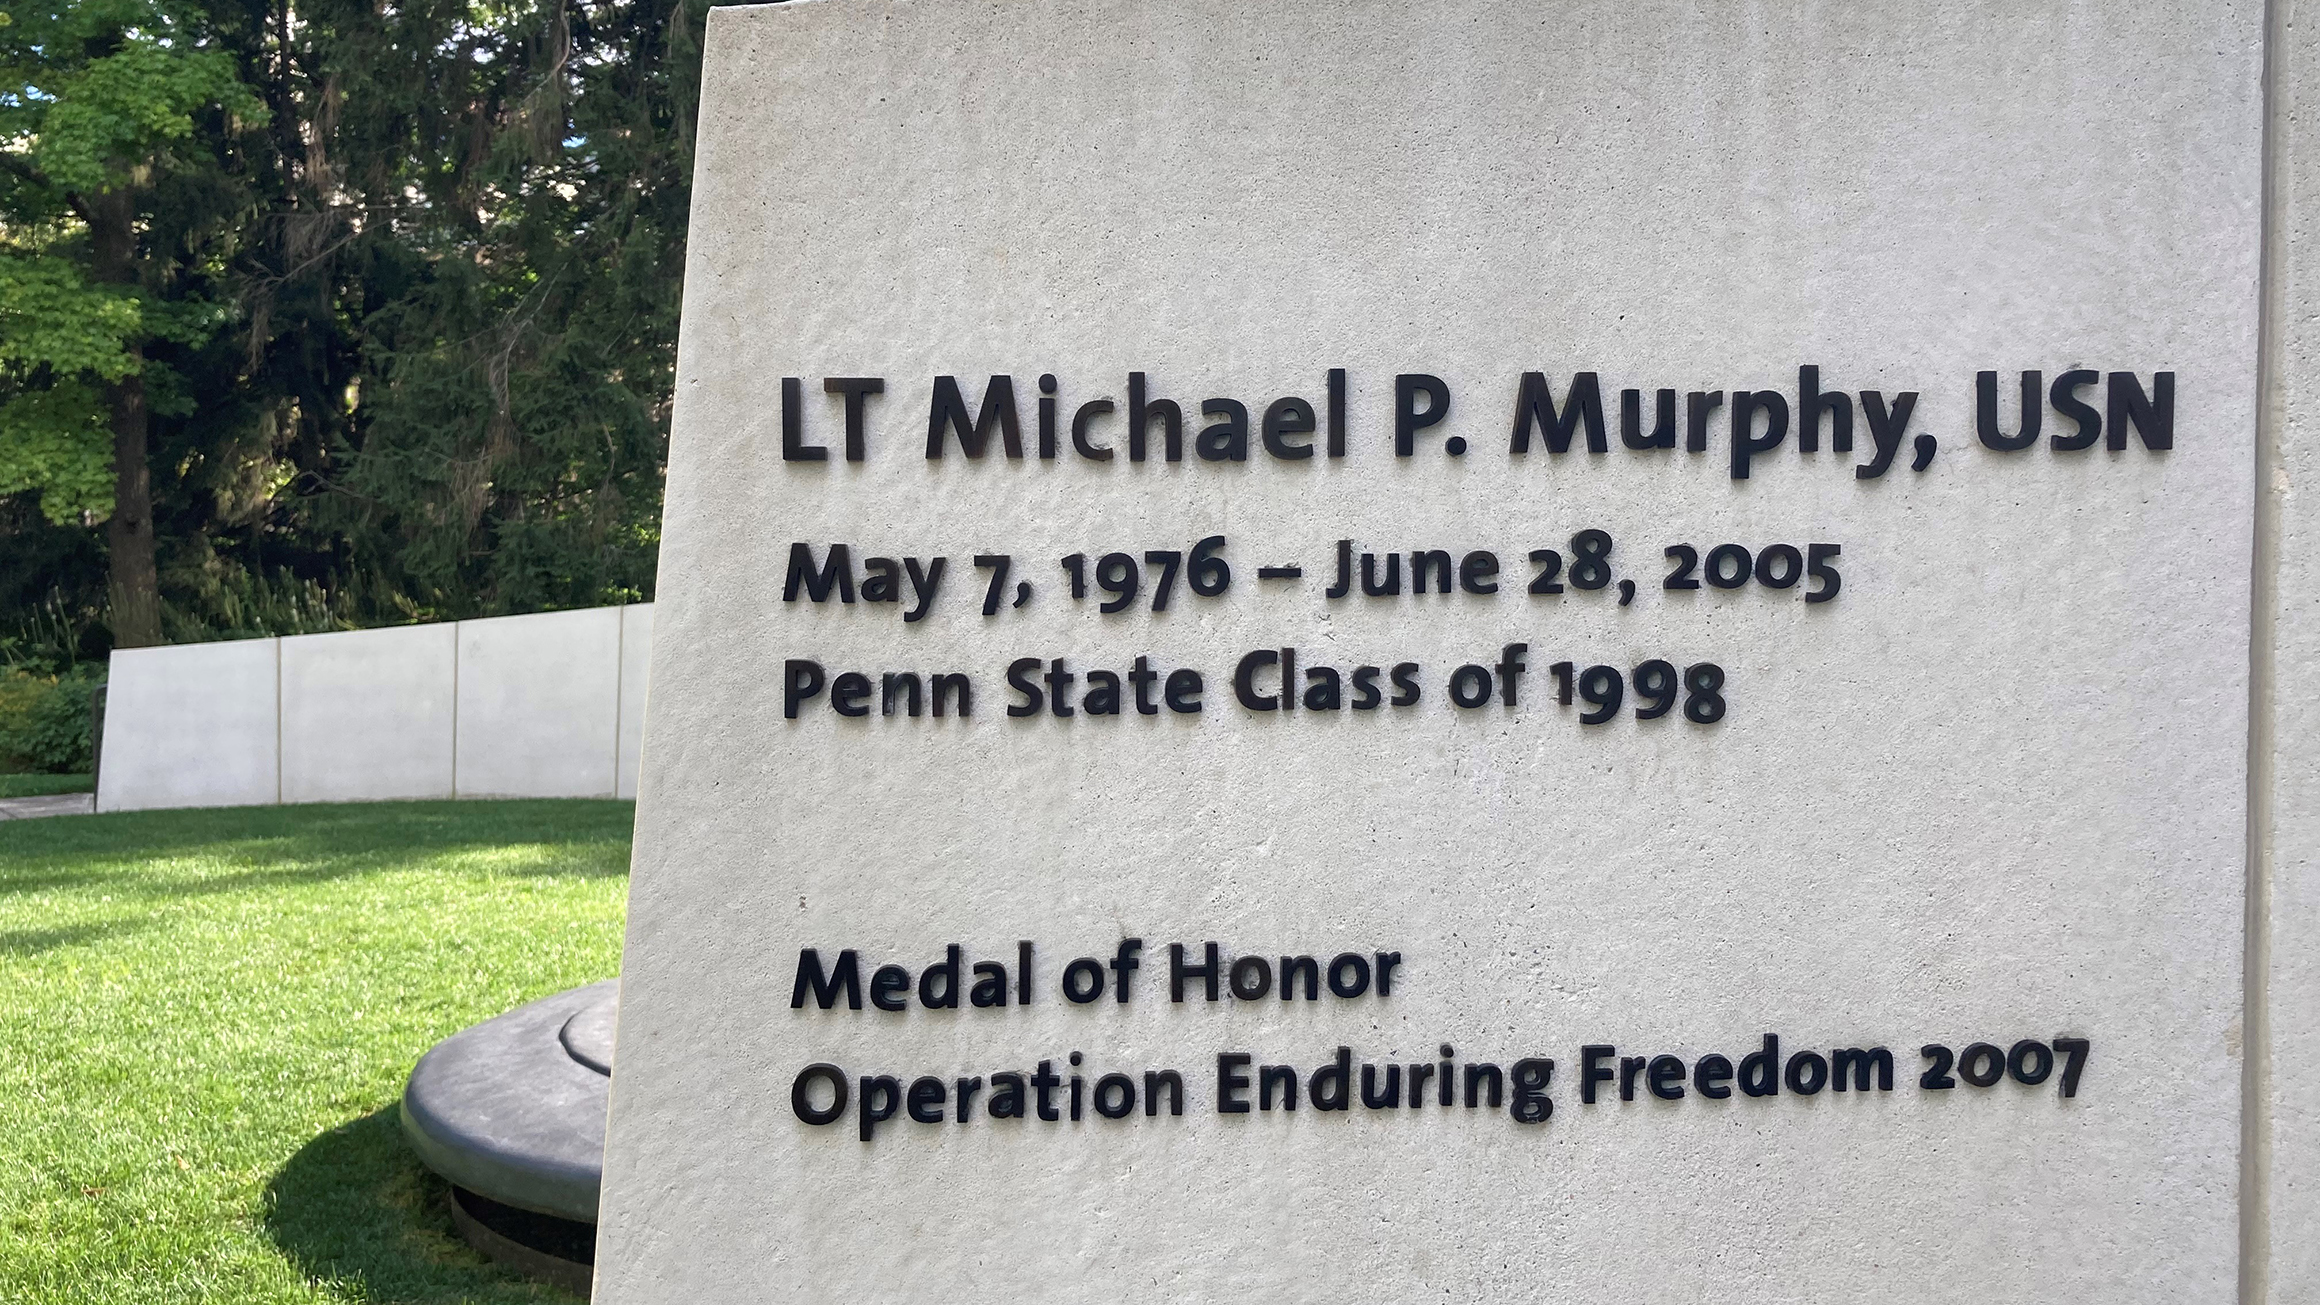 A concrete memorial honors veterans and service members.